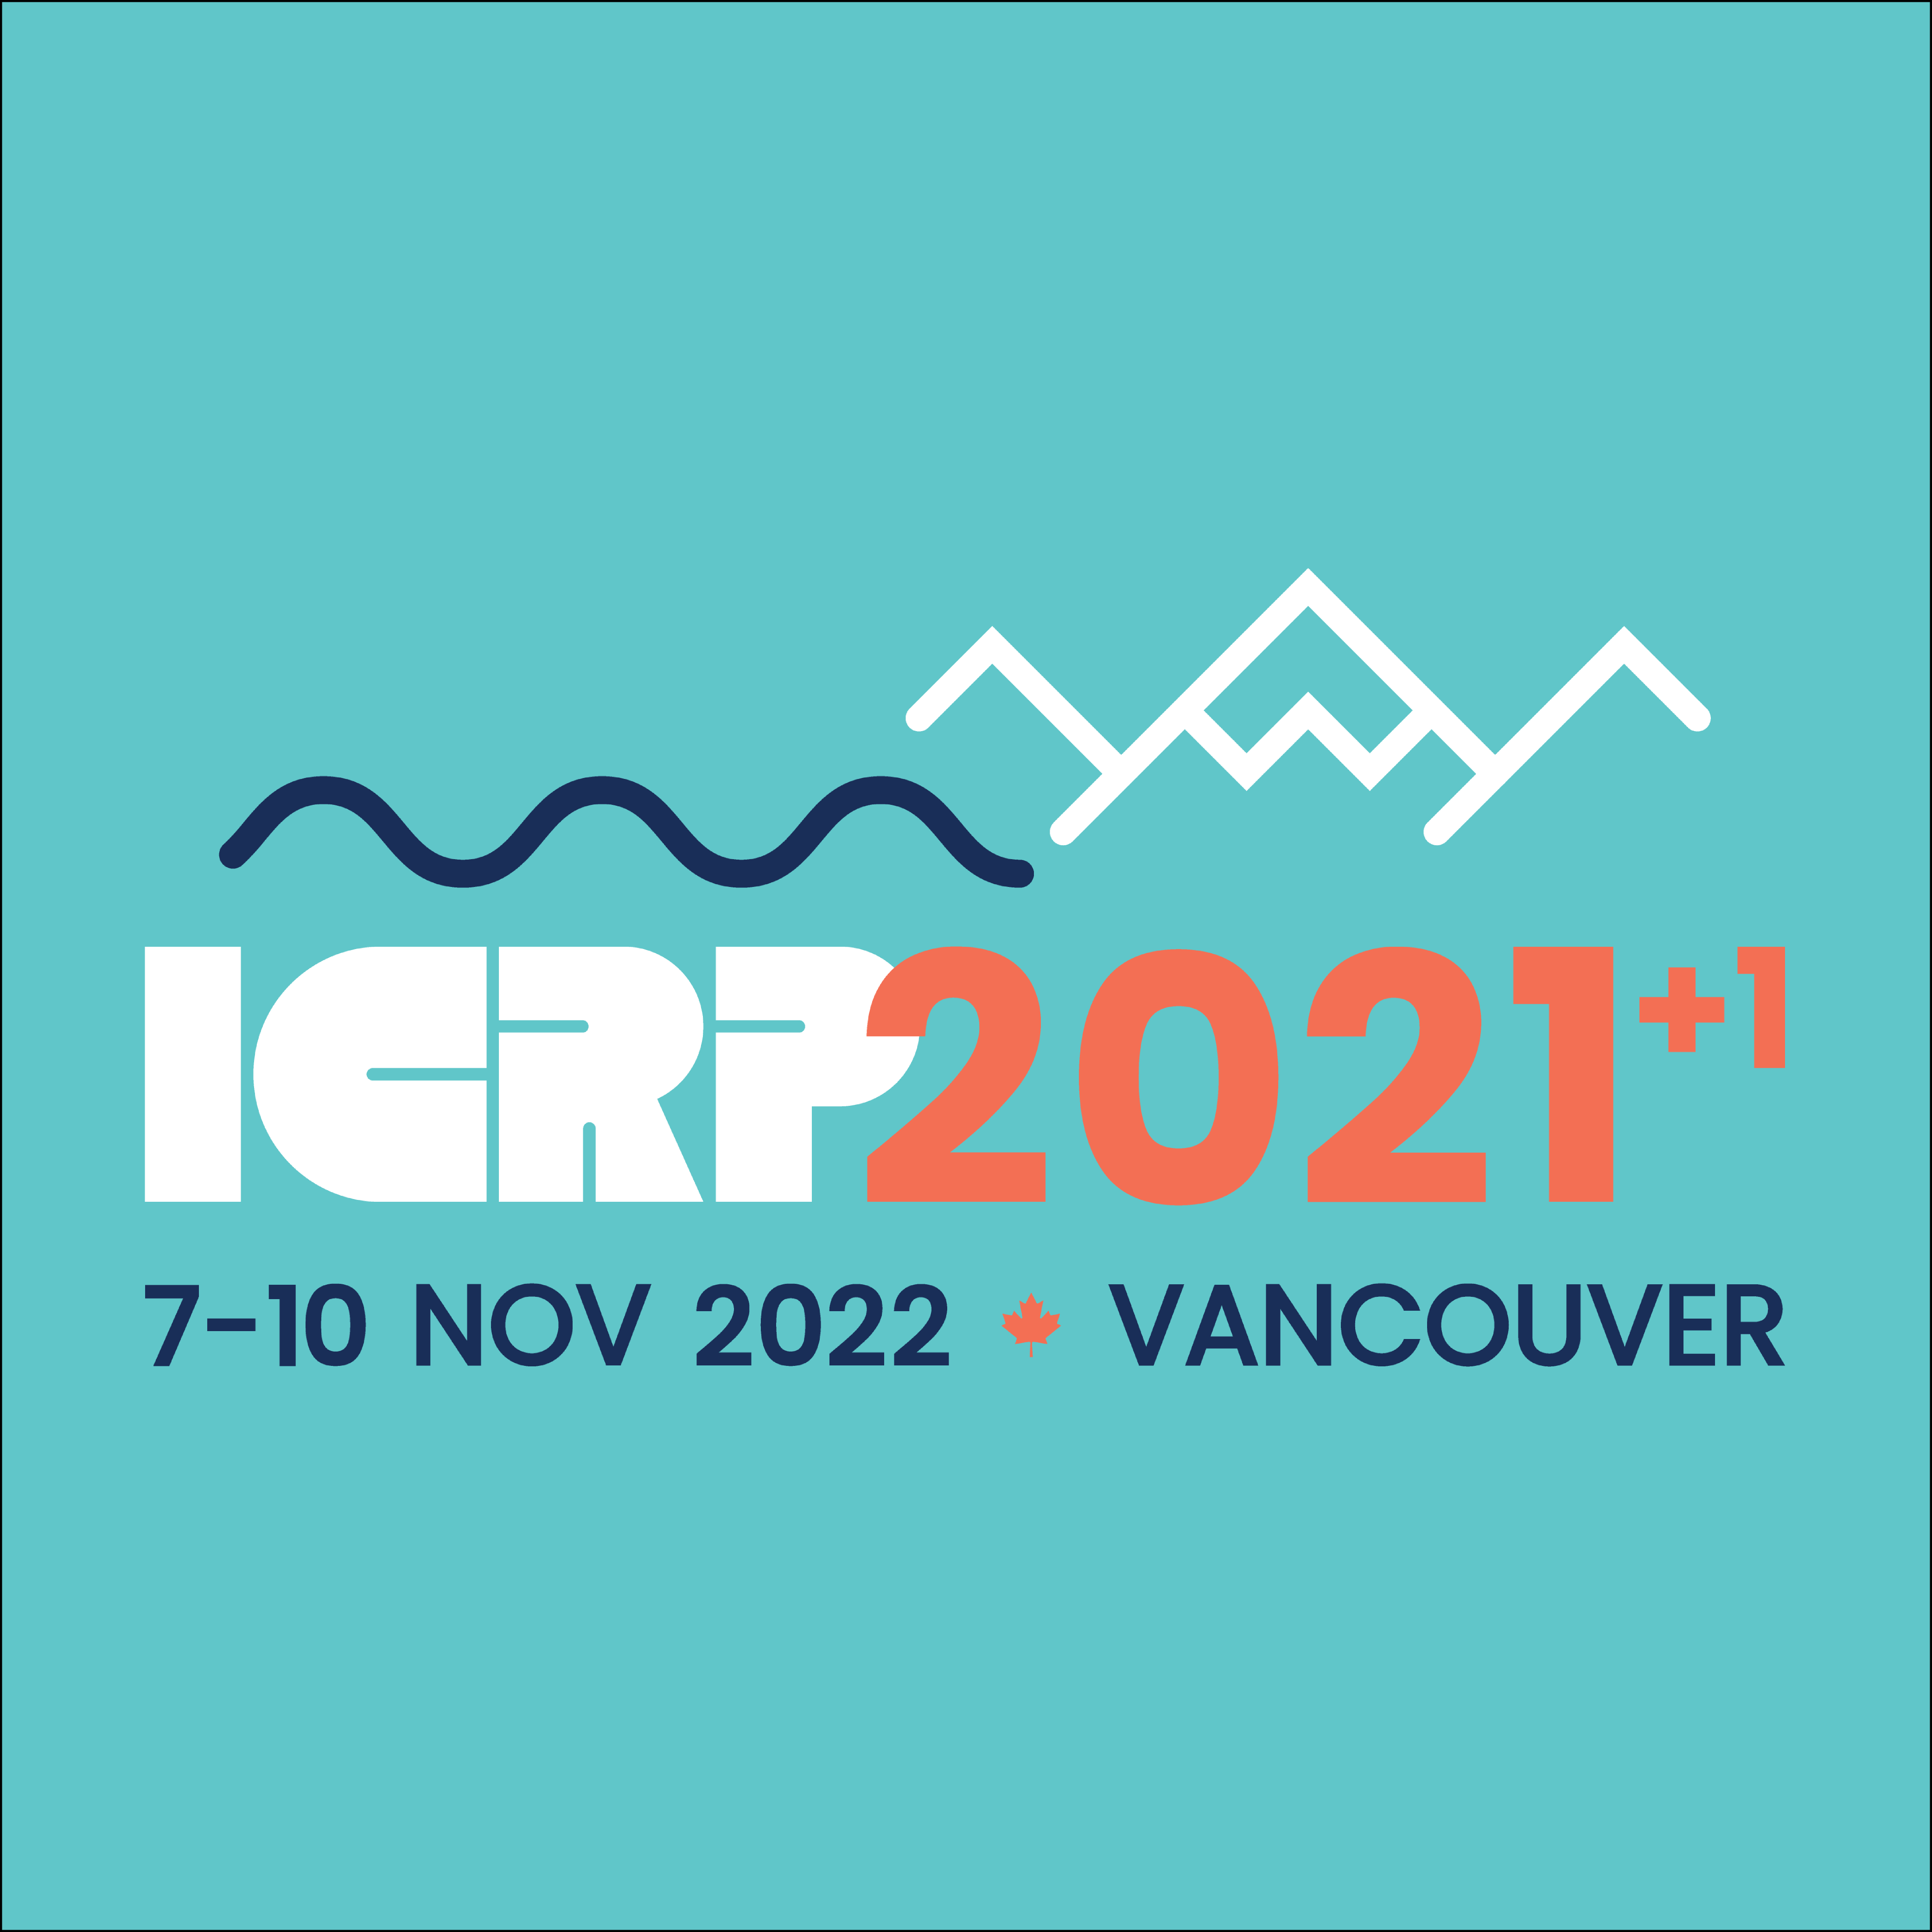 ICRP2021+1: 7-10 November 2022, Vancouver, Canada